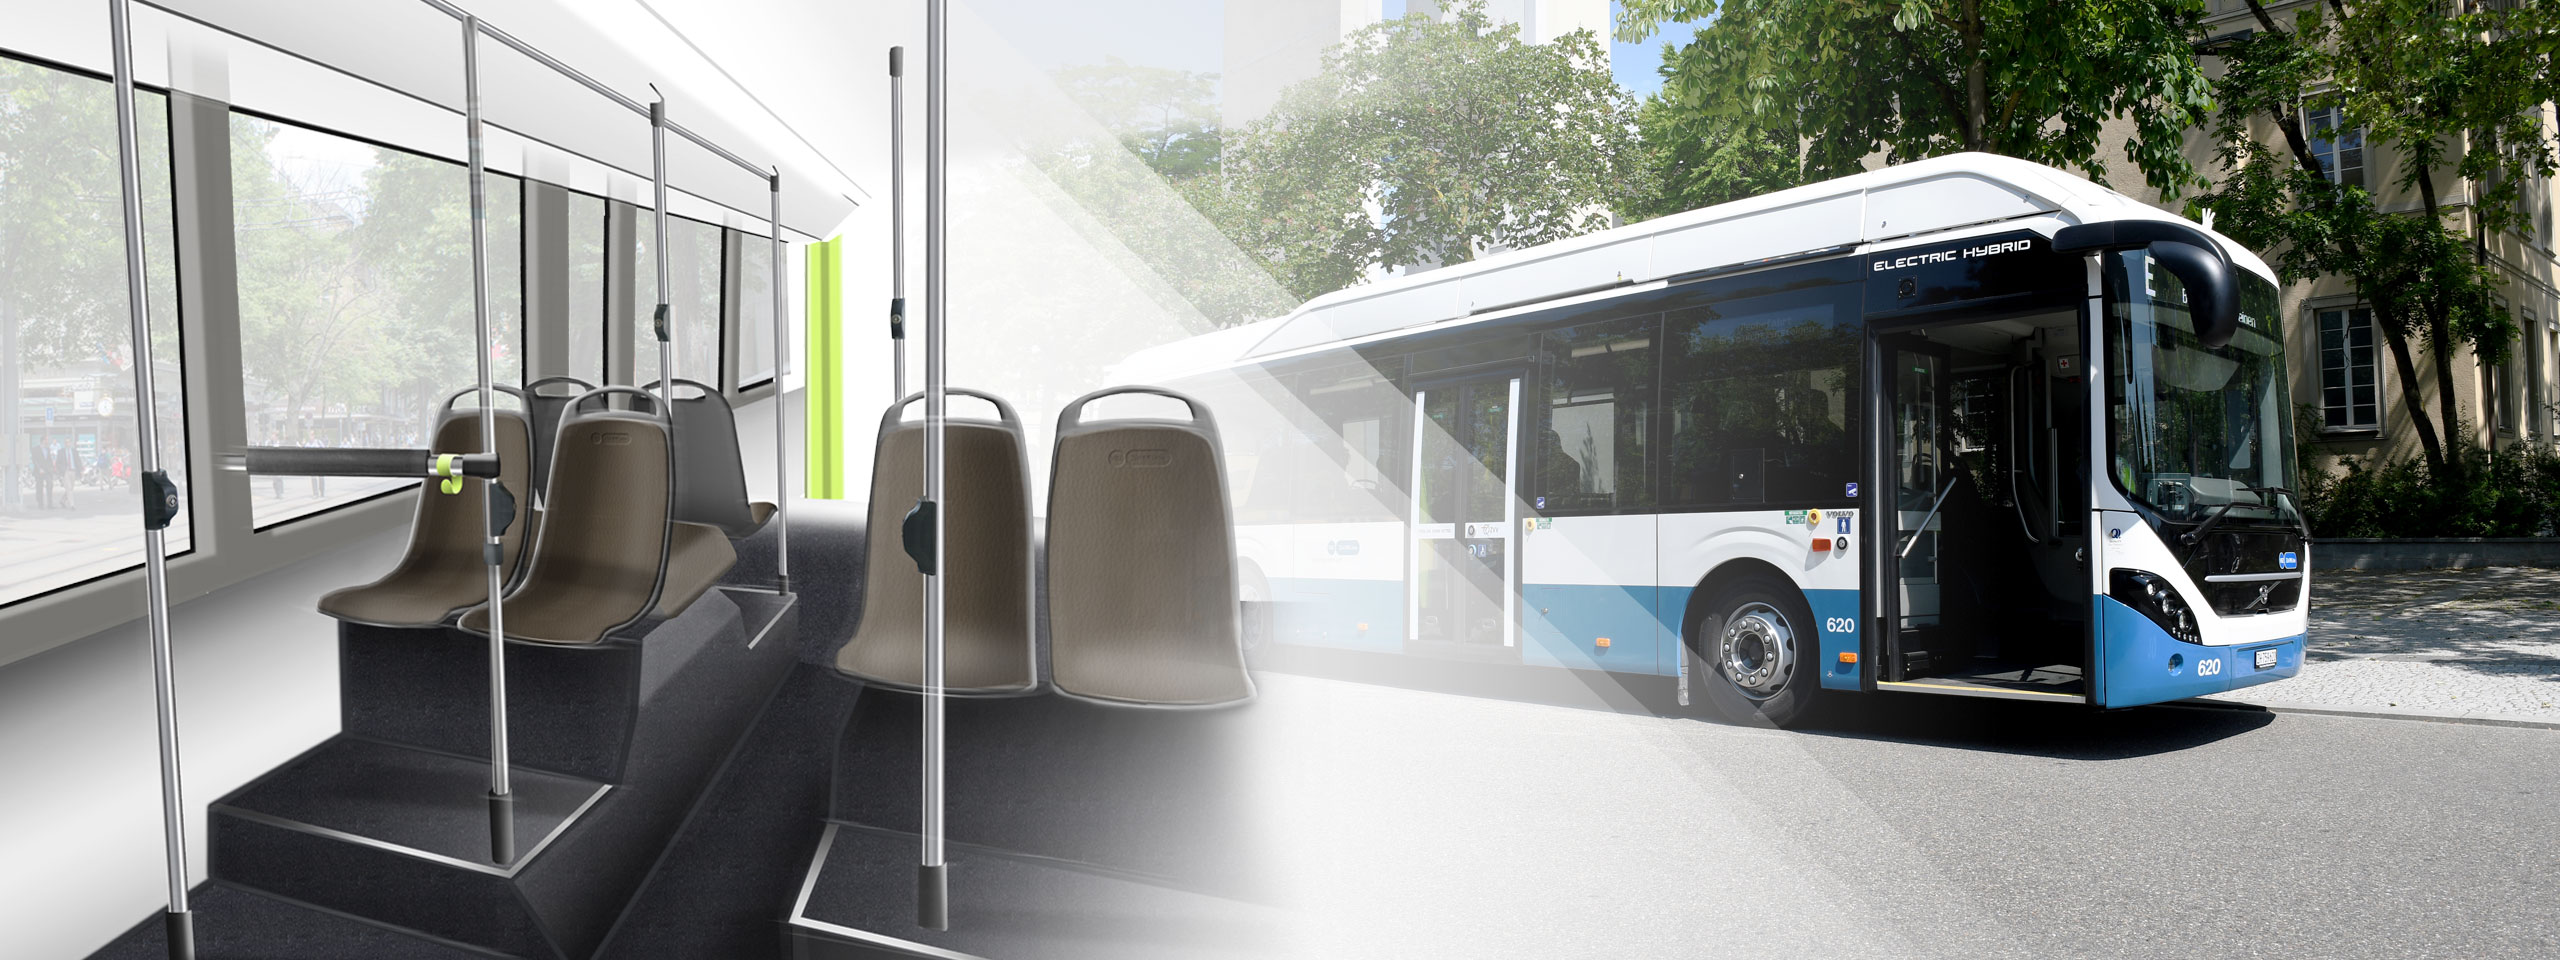 000 Teaser milani design consulting agency transportation design bus VBZ